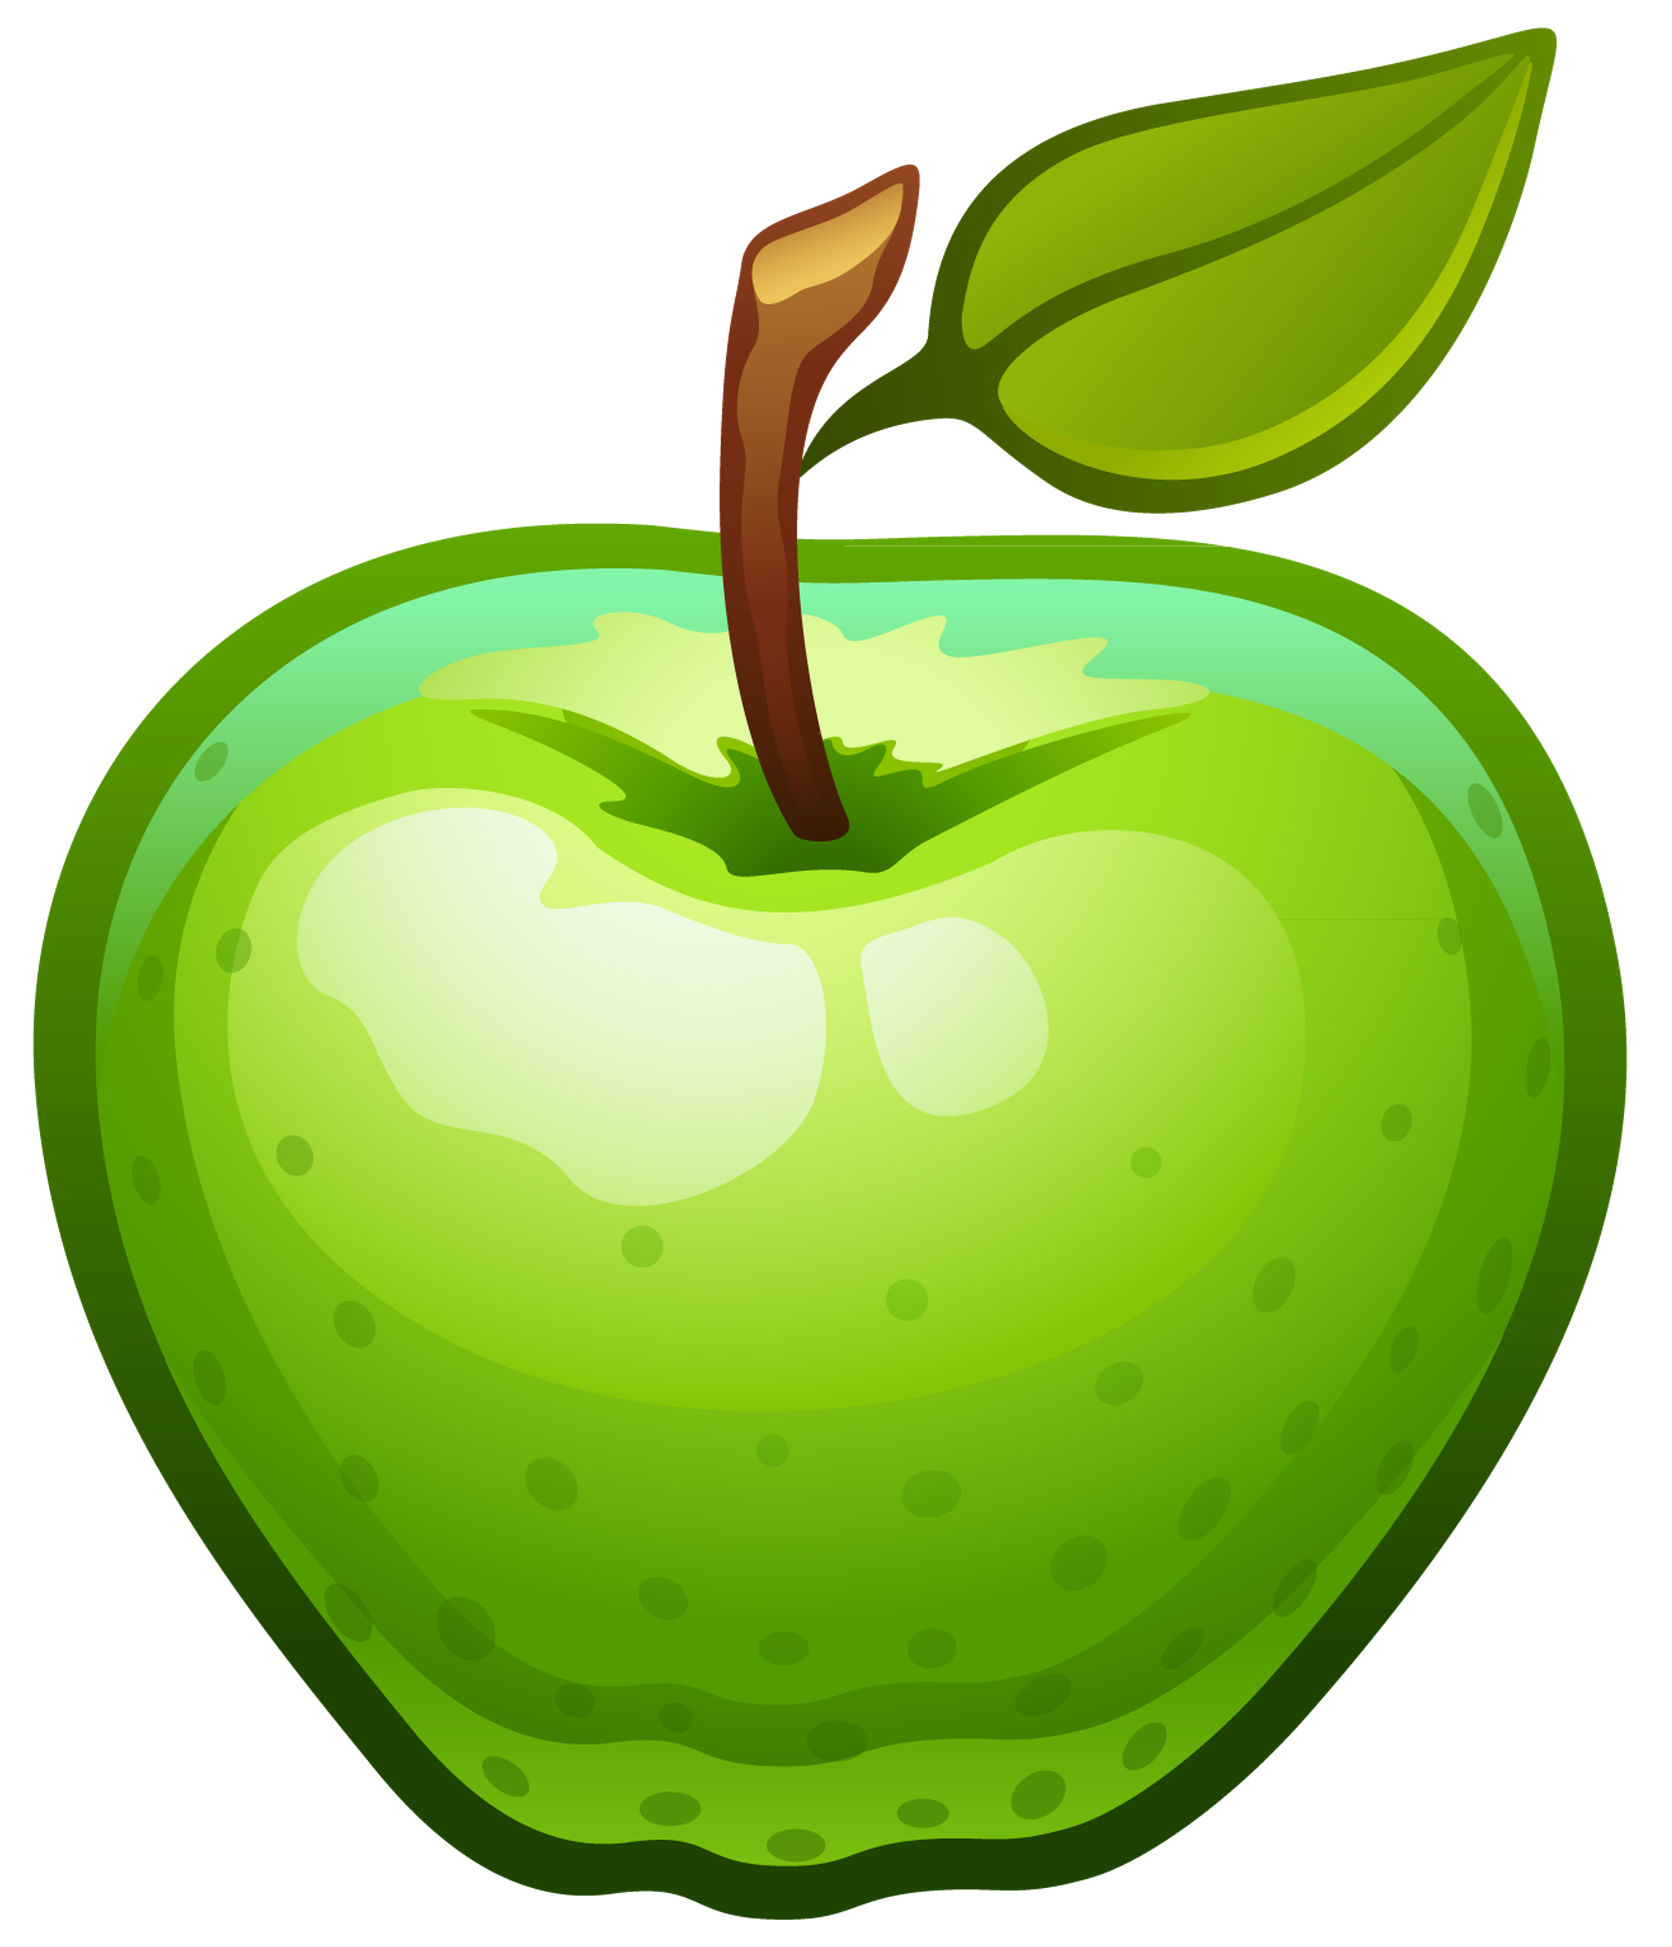 green apple clipart